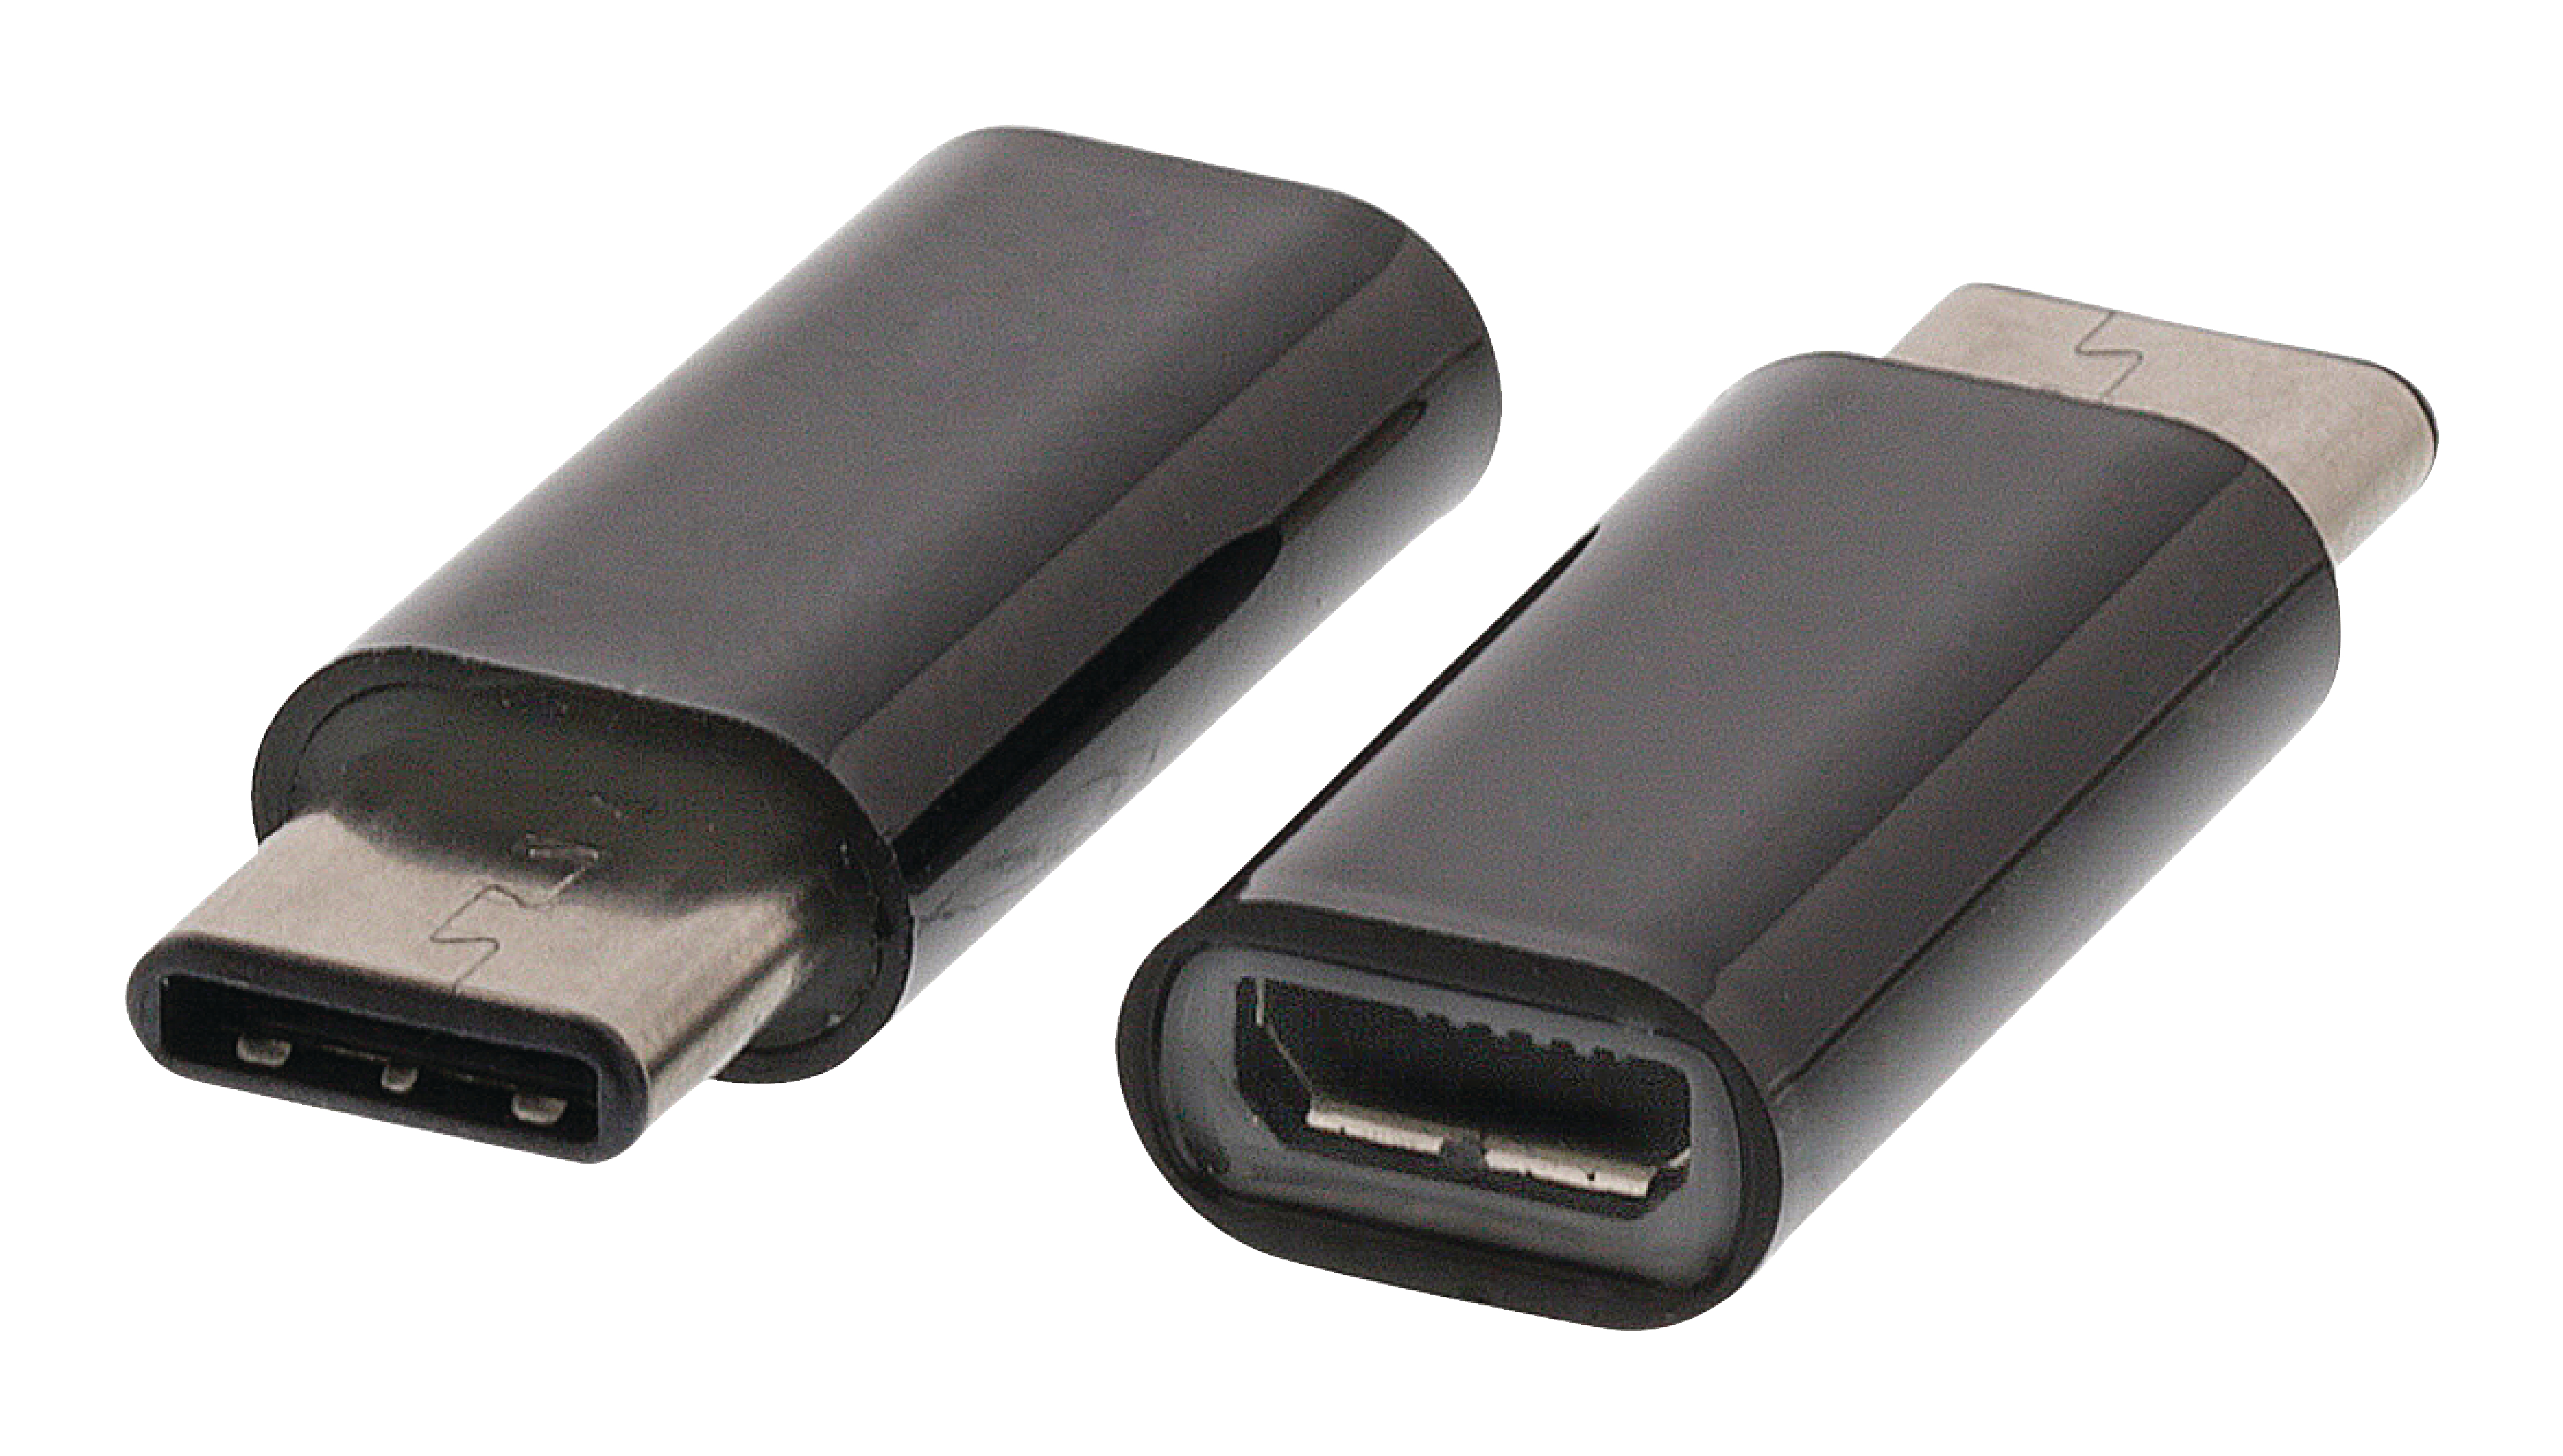 Adattatore USB C maschio to Micro USB femmina su